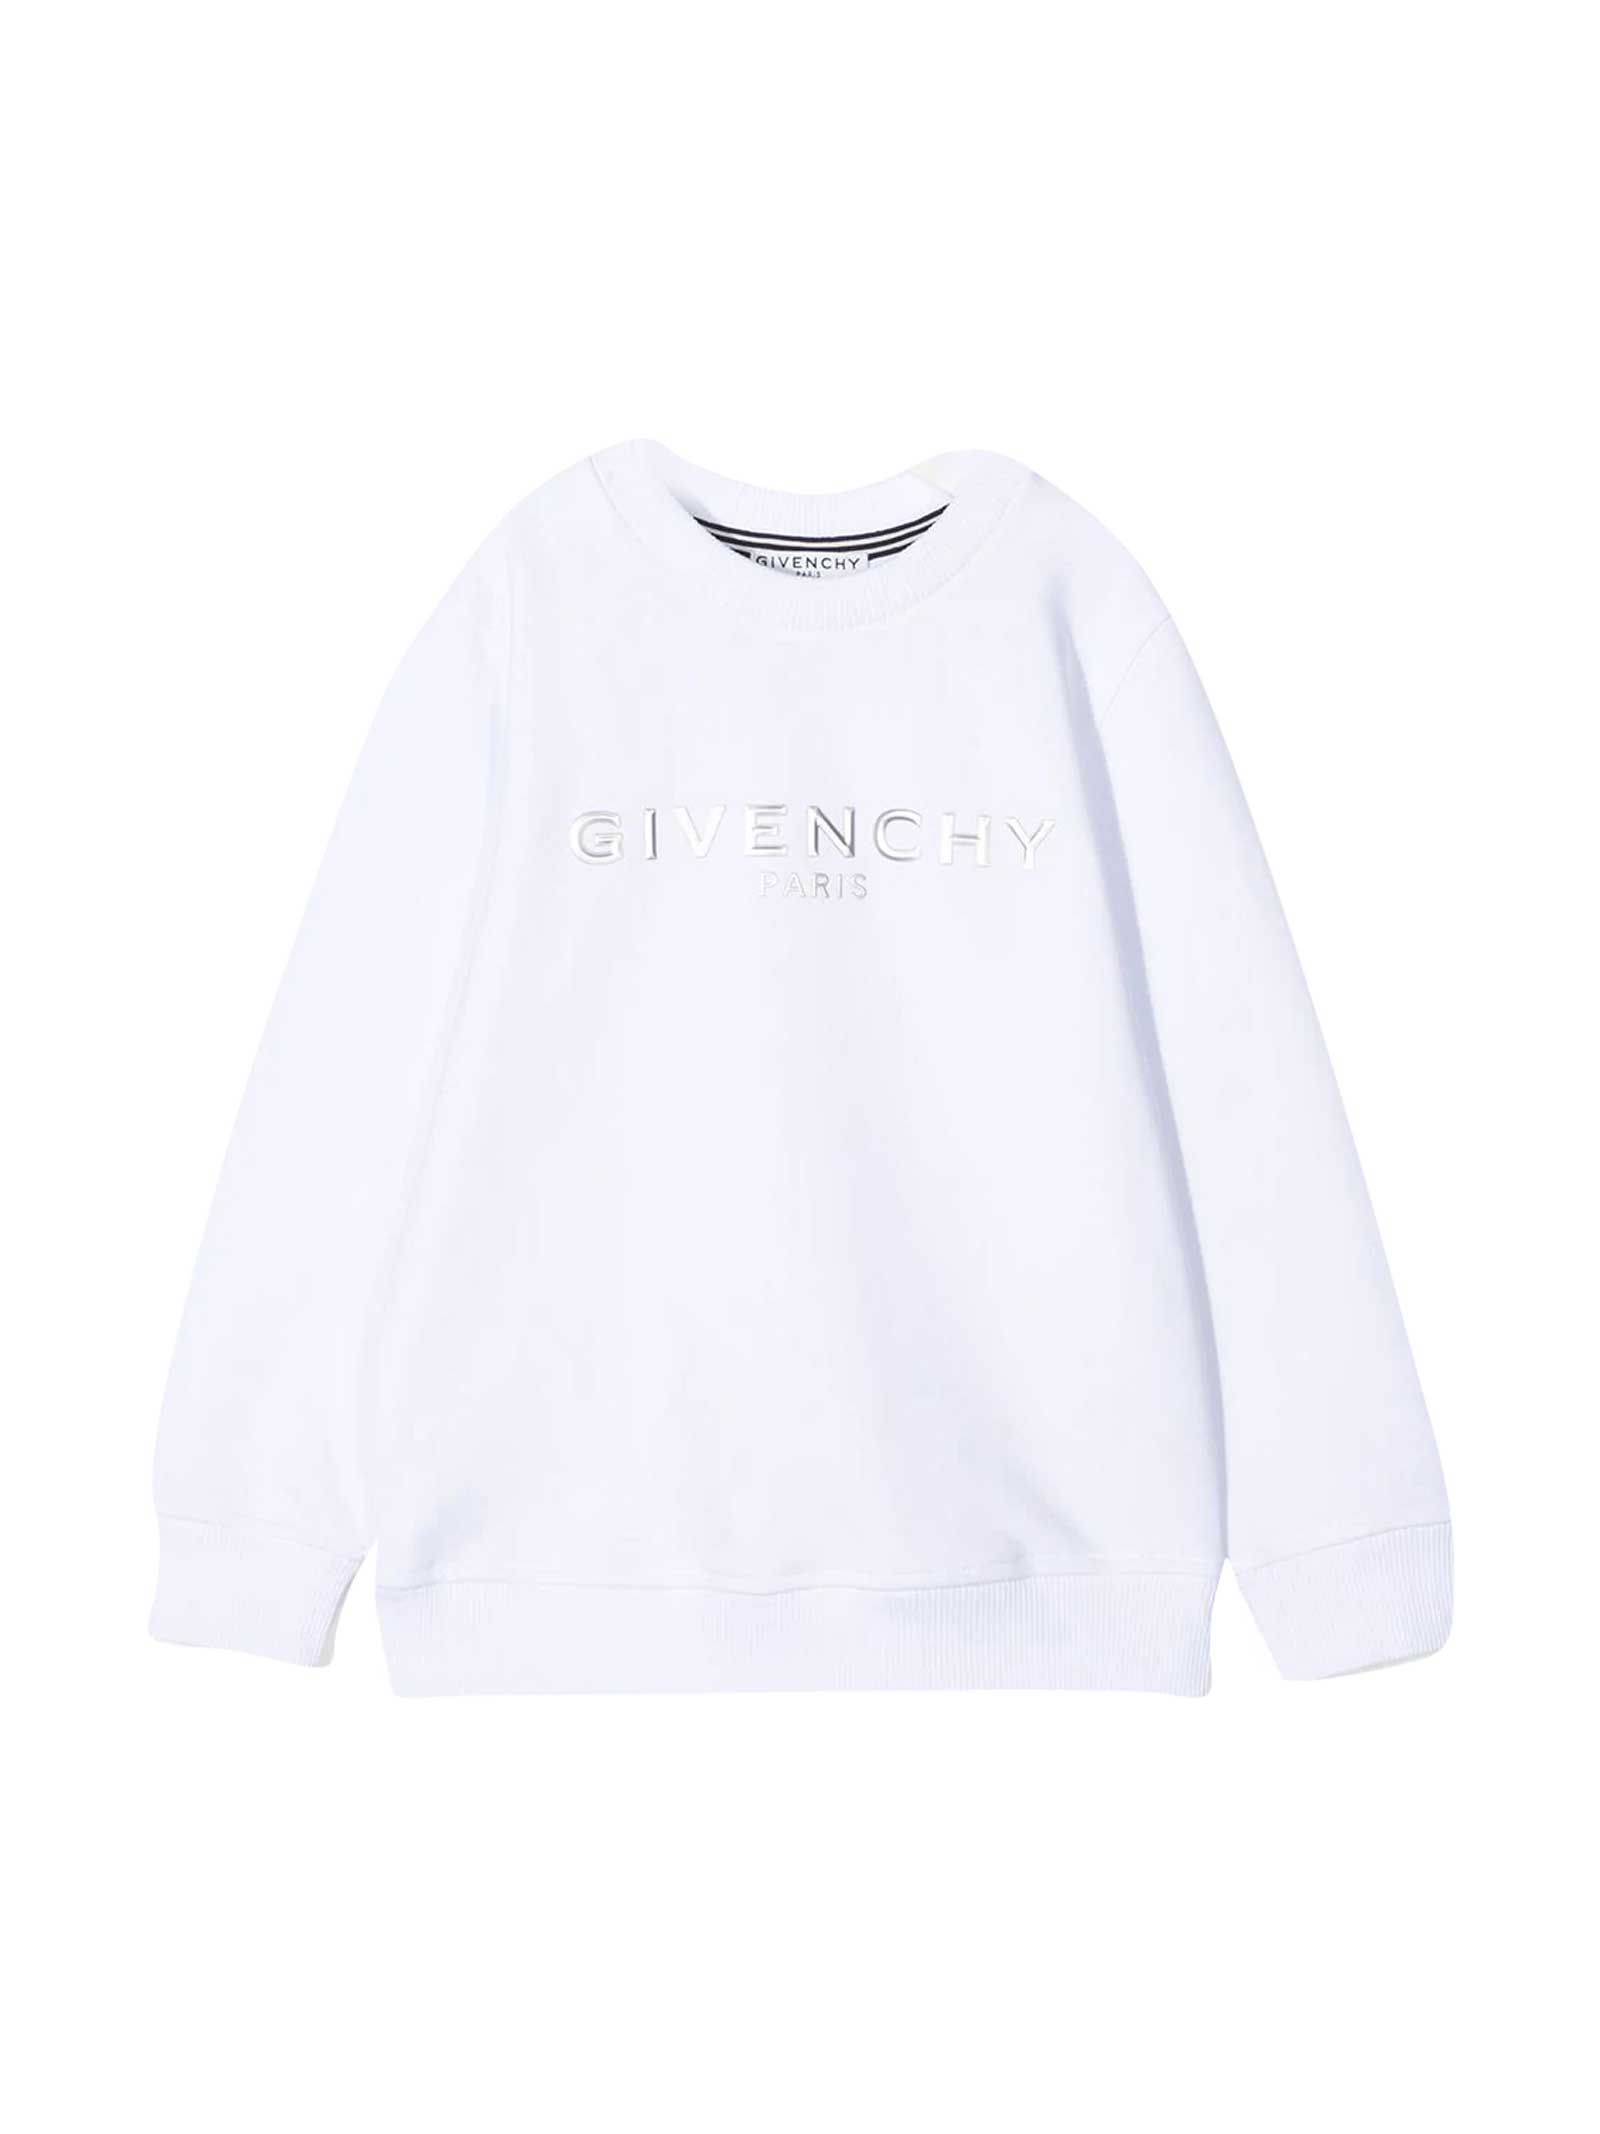 Givenchy White Sweatshirt With Logo